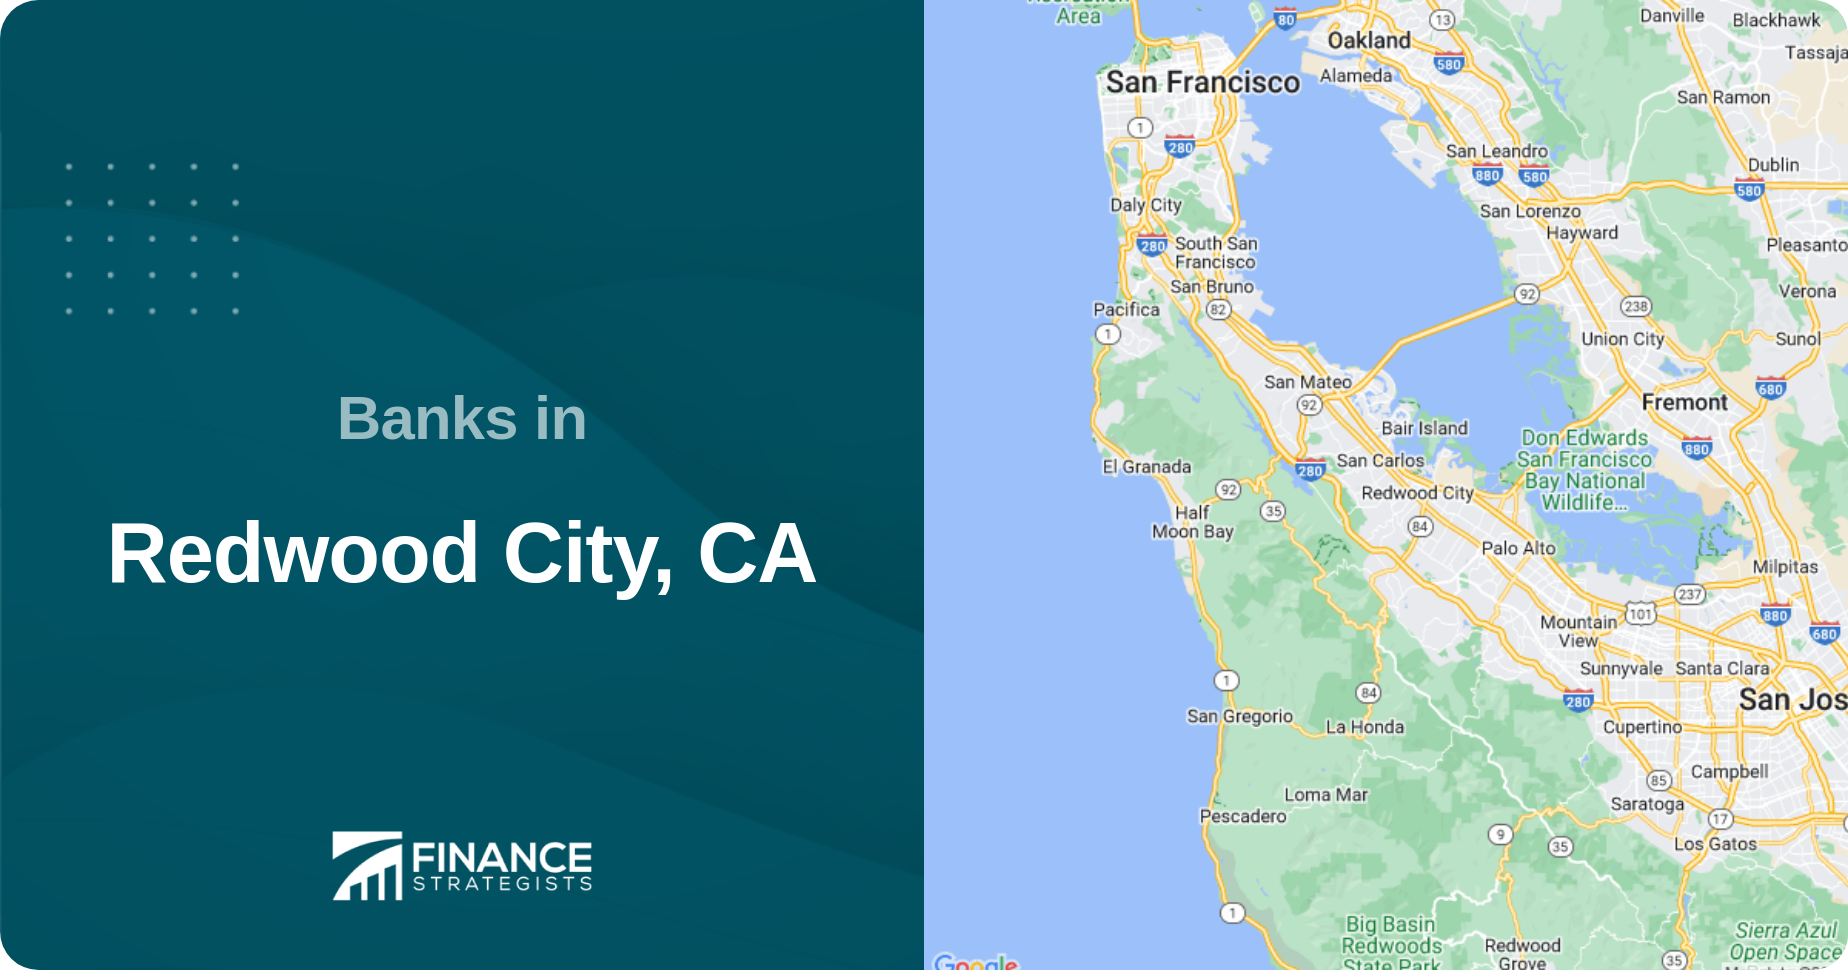 Banks in Redwood City, CA